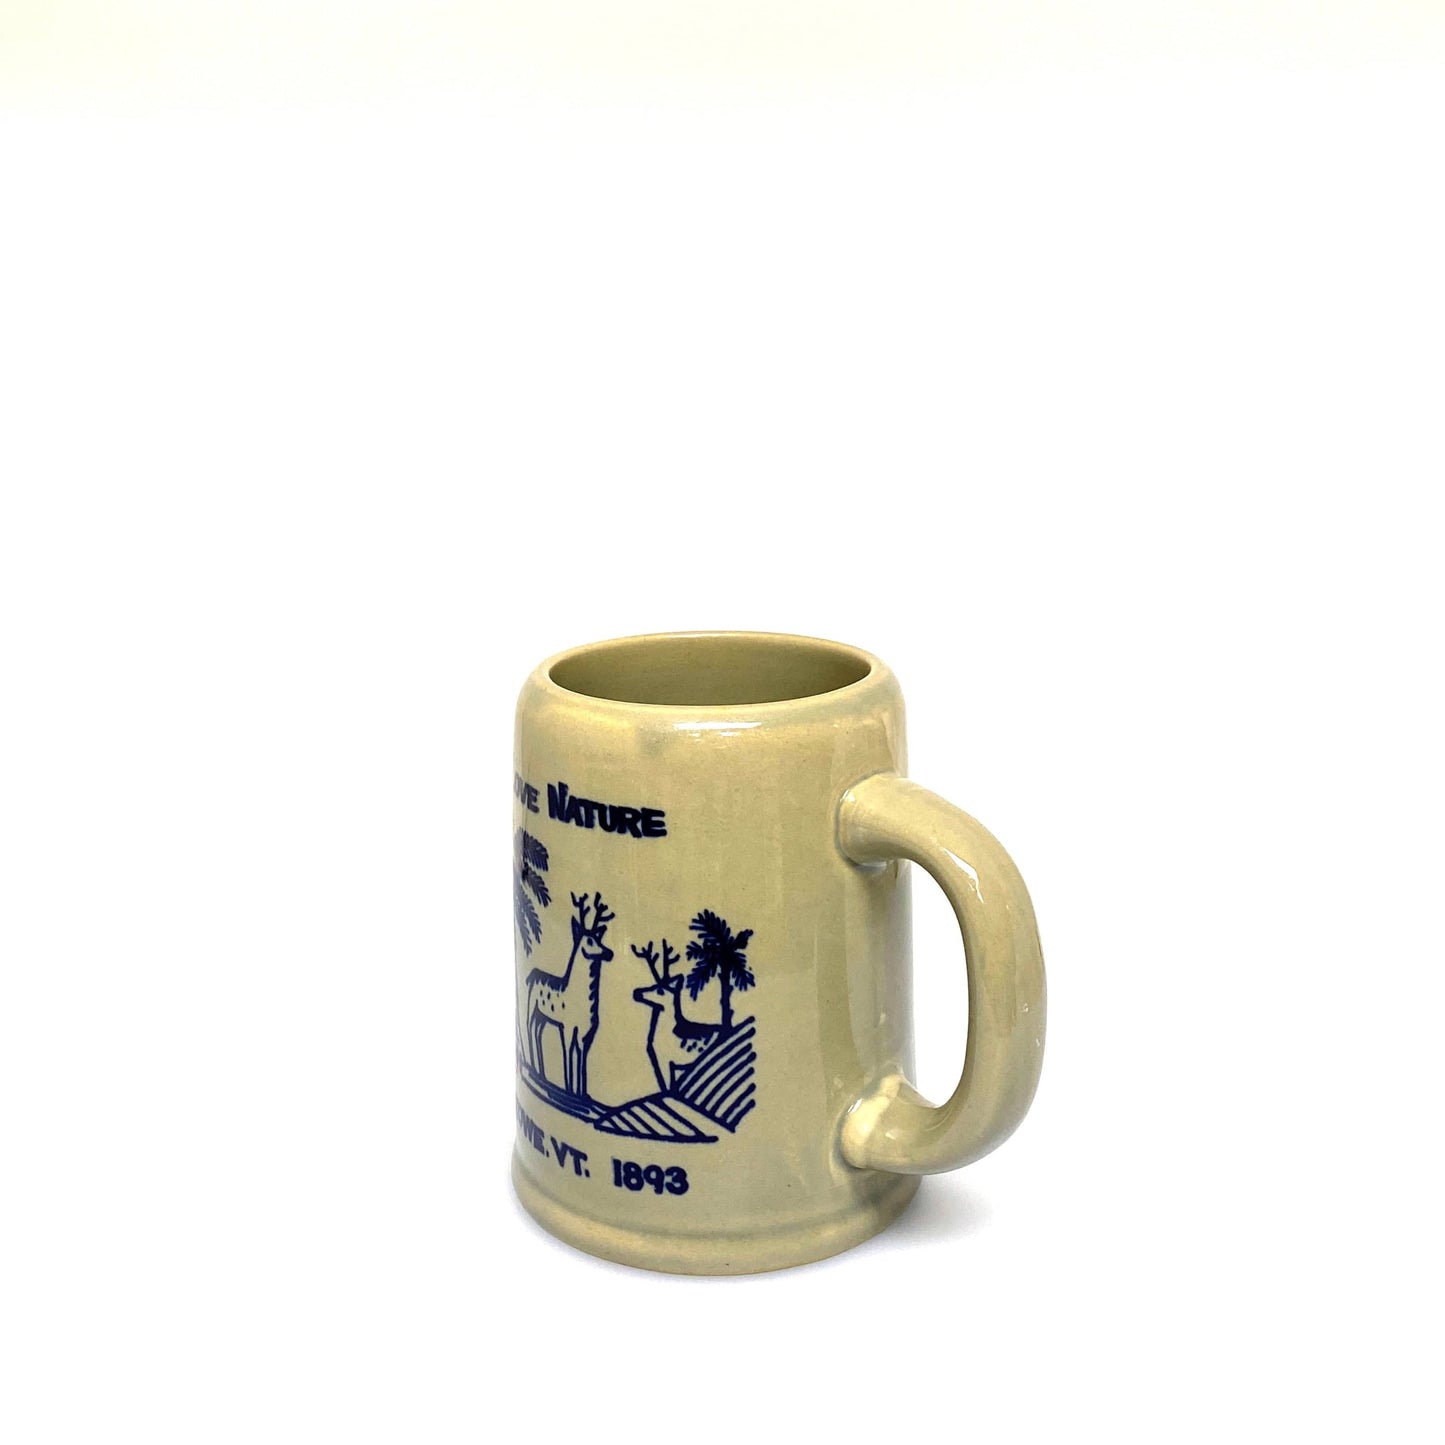 Stowe, VT 1893 “Love Nature” Travel Souvenir Ceramic Coffee Cup Mug